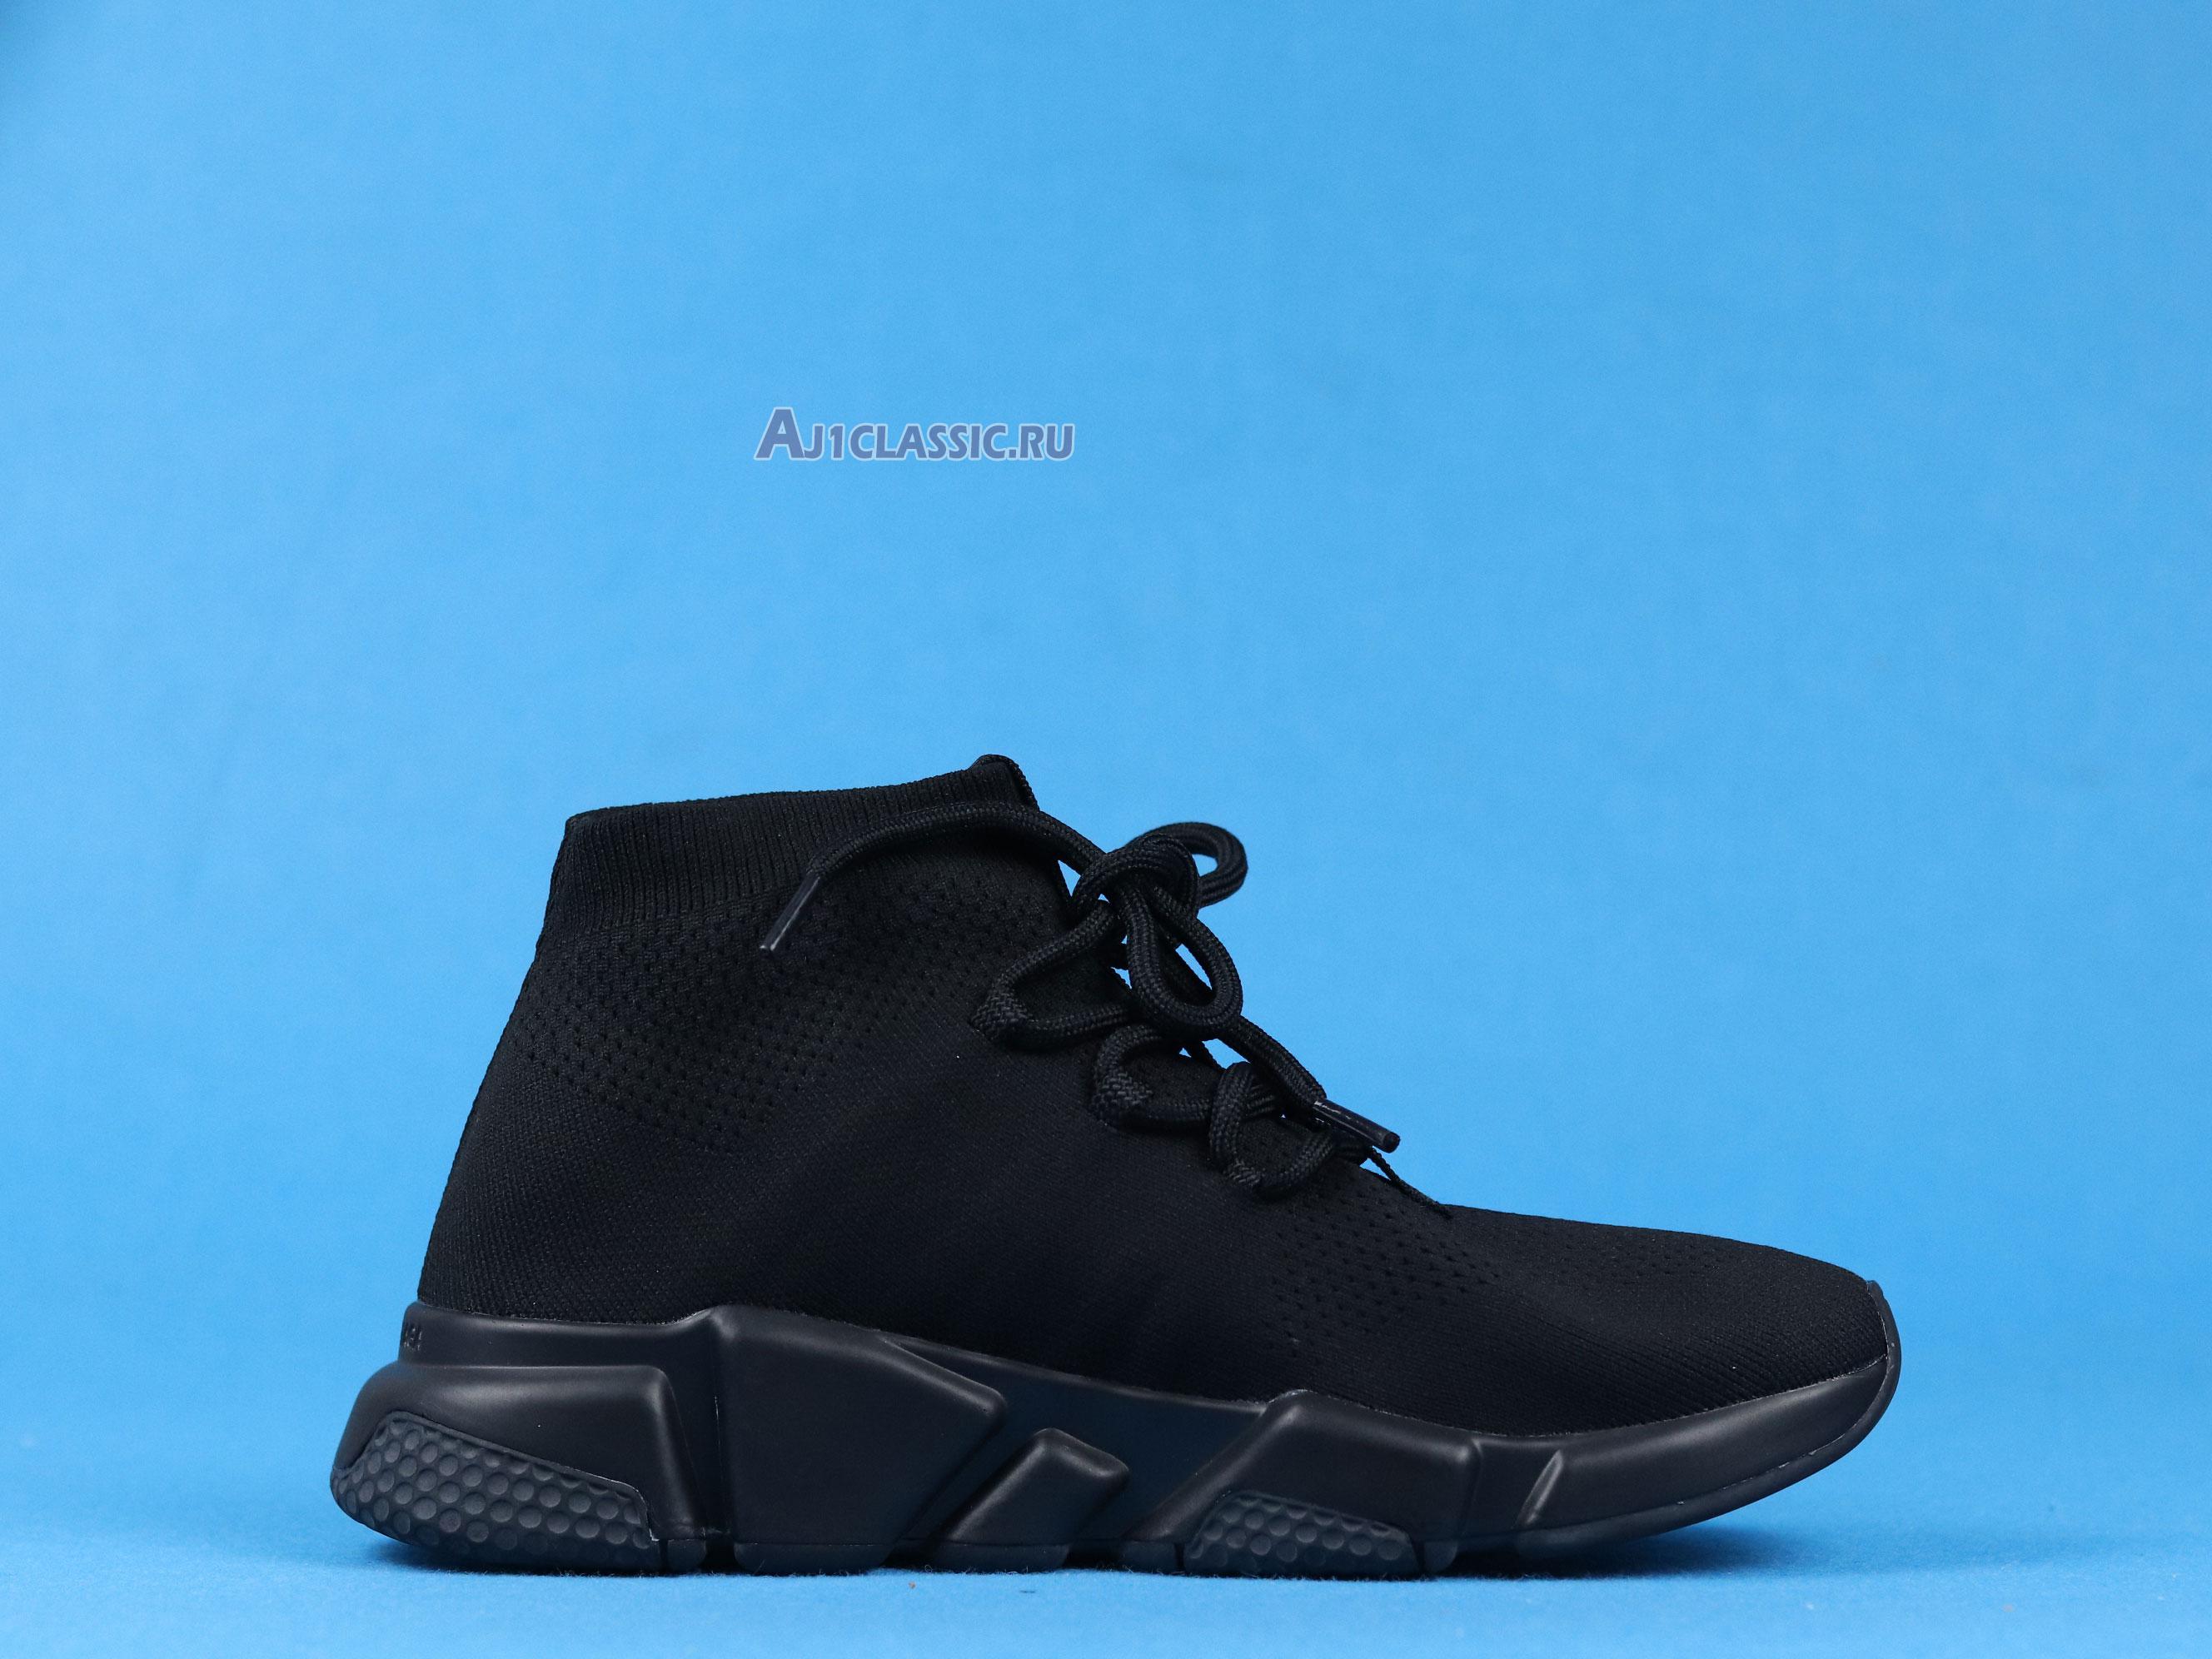 Balenciaga Speed Lace-Up Sneaker "Black" 587289 W2DB1 1013